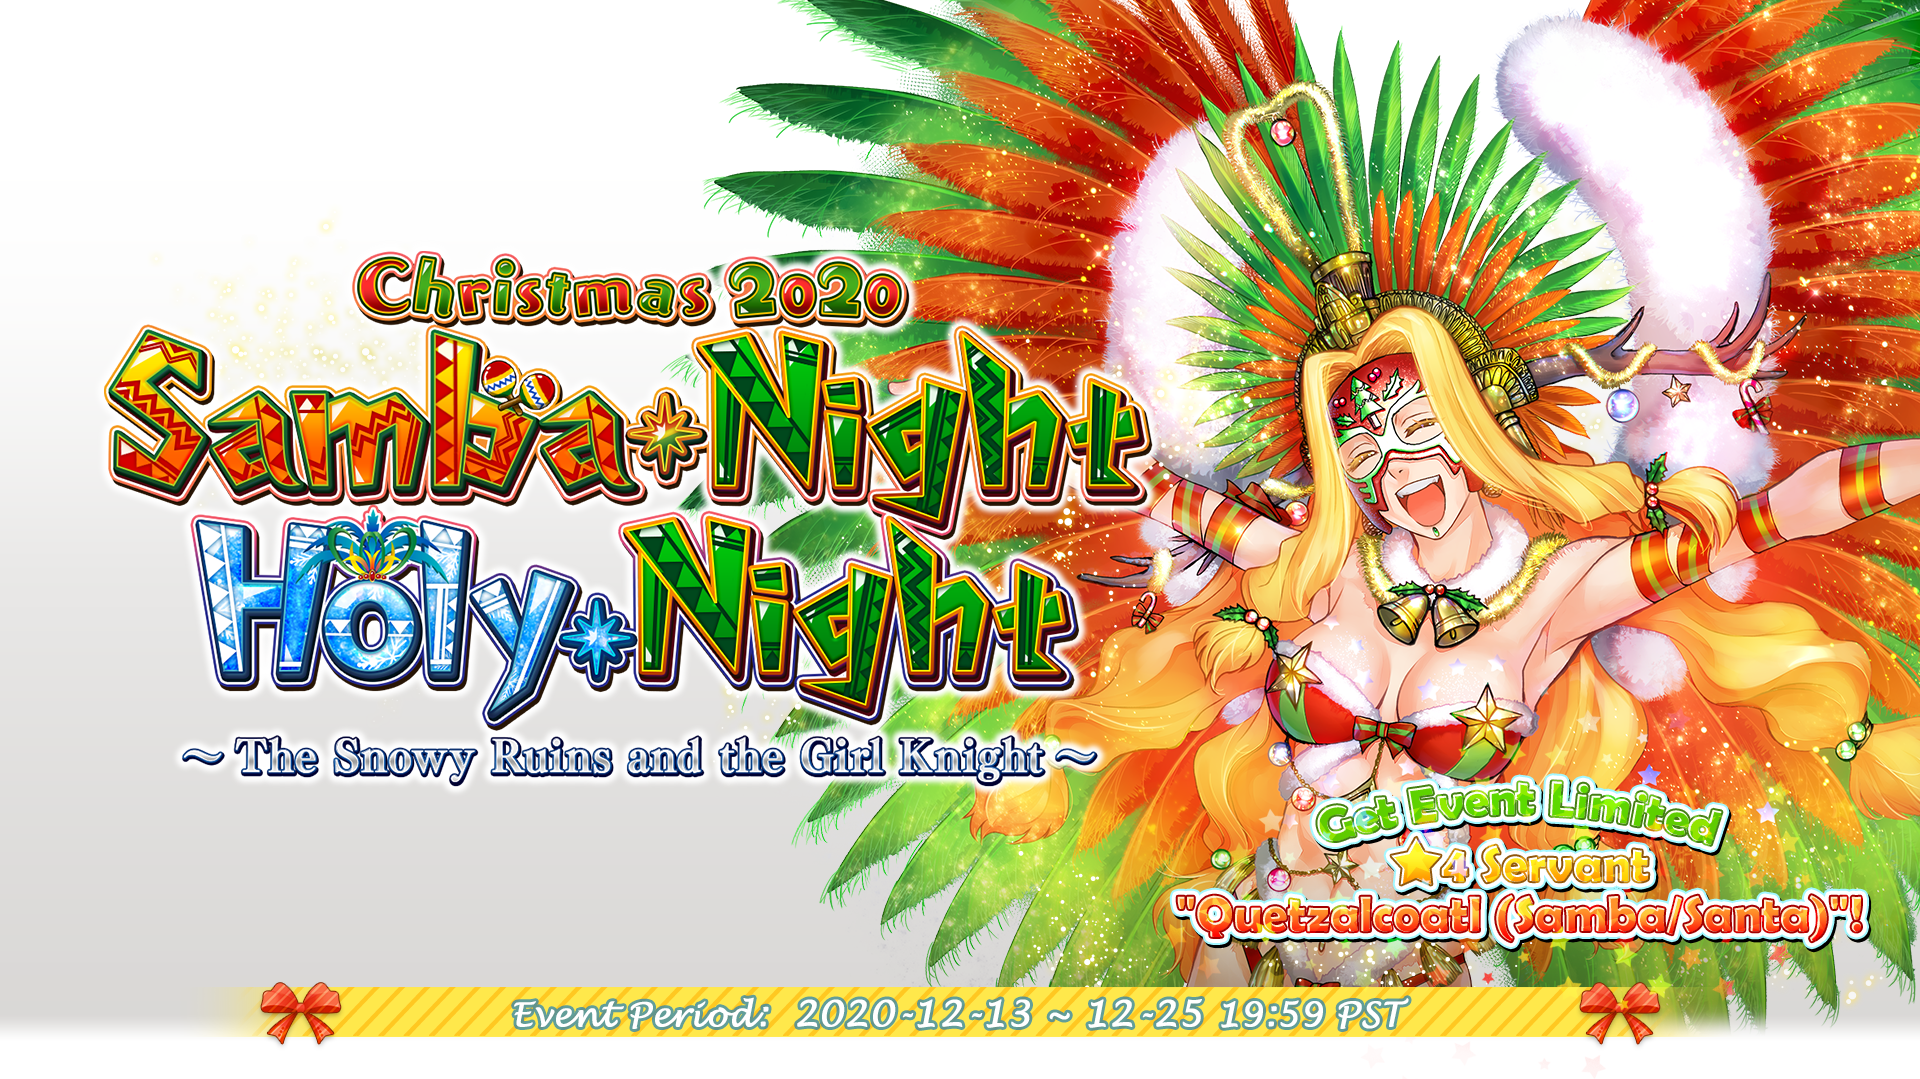 Christmas 2020 Samba Night, Holy Night. Get Event Limited 4 Star Servant Quetzalcoatl (Samba/Santa)! Event Period: 2020.12.13-12.25 19:59 PST